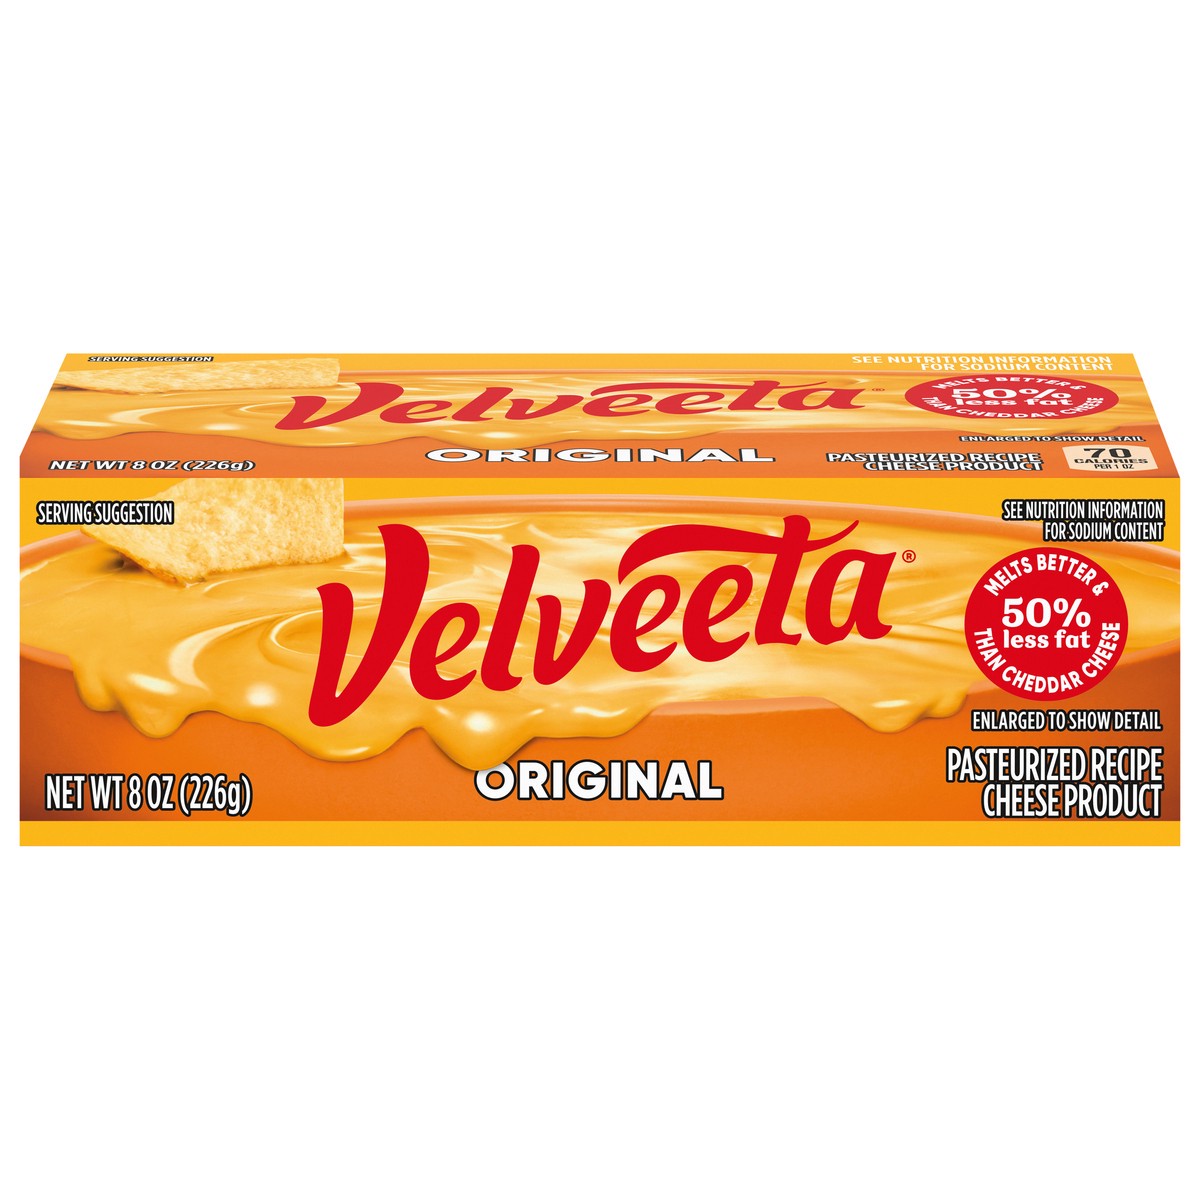 slide 1 of 9, Velveeta Original Pasteurized Recipe Cheese Product, 8 oz Block, 8 oz